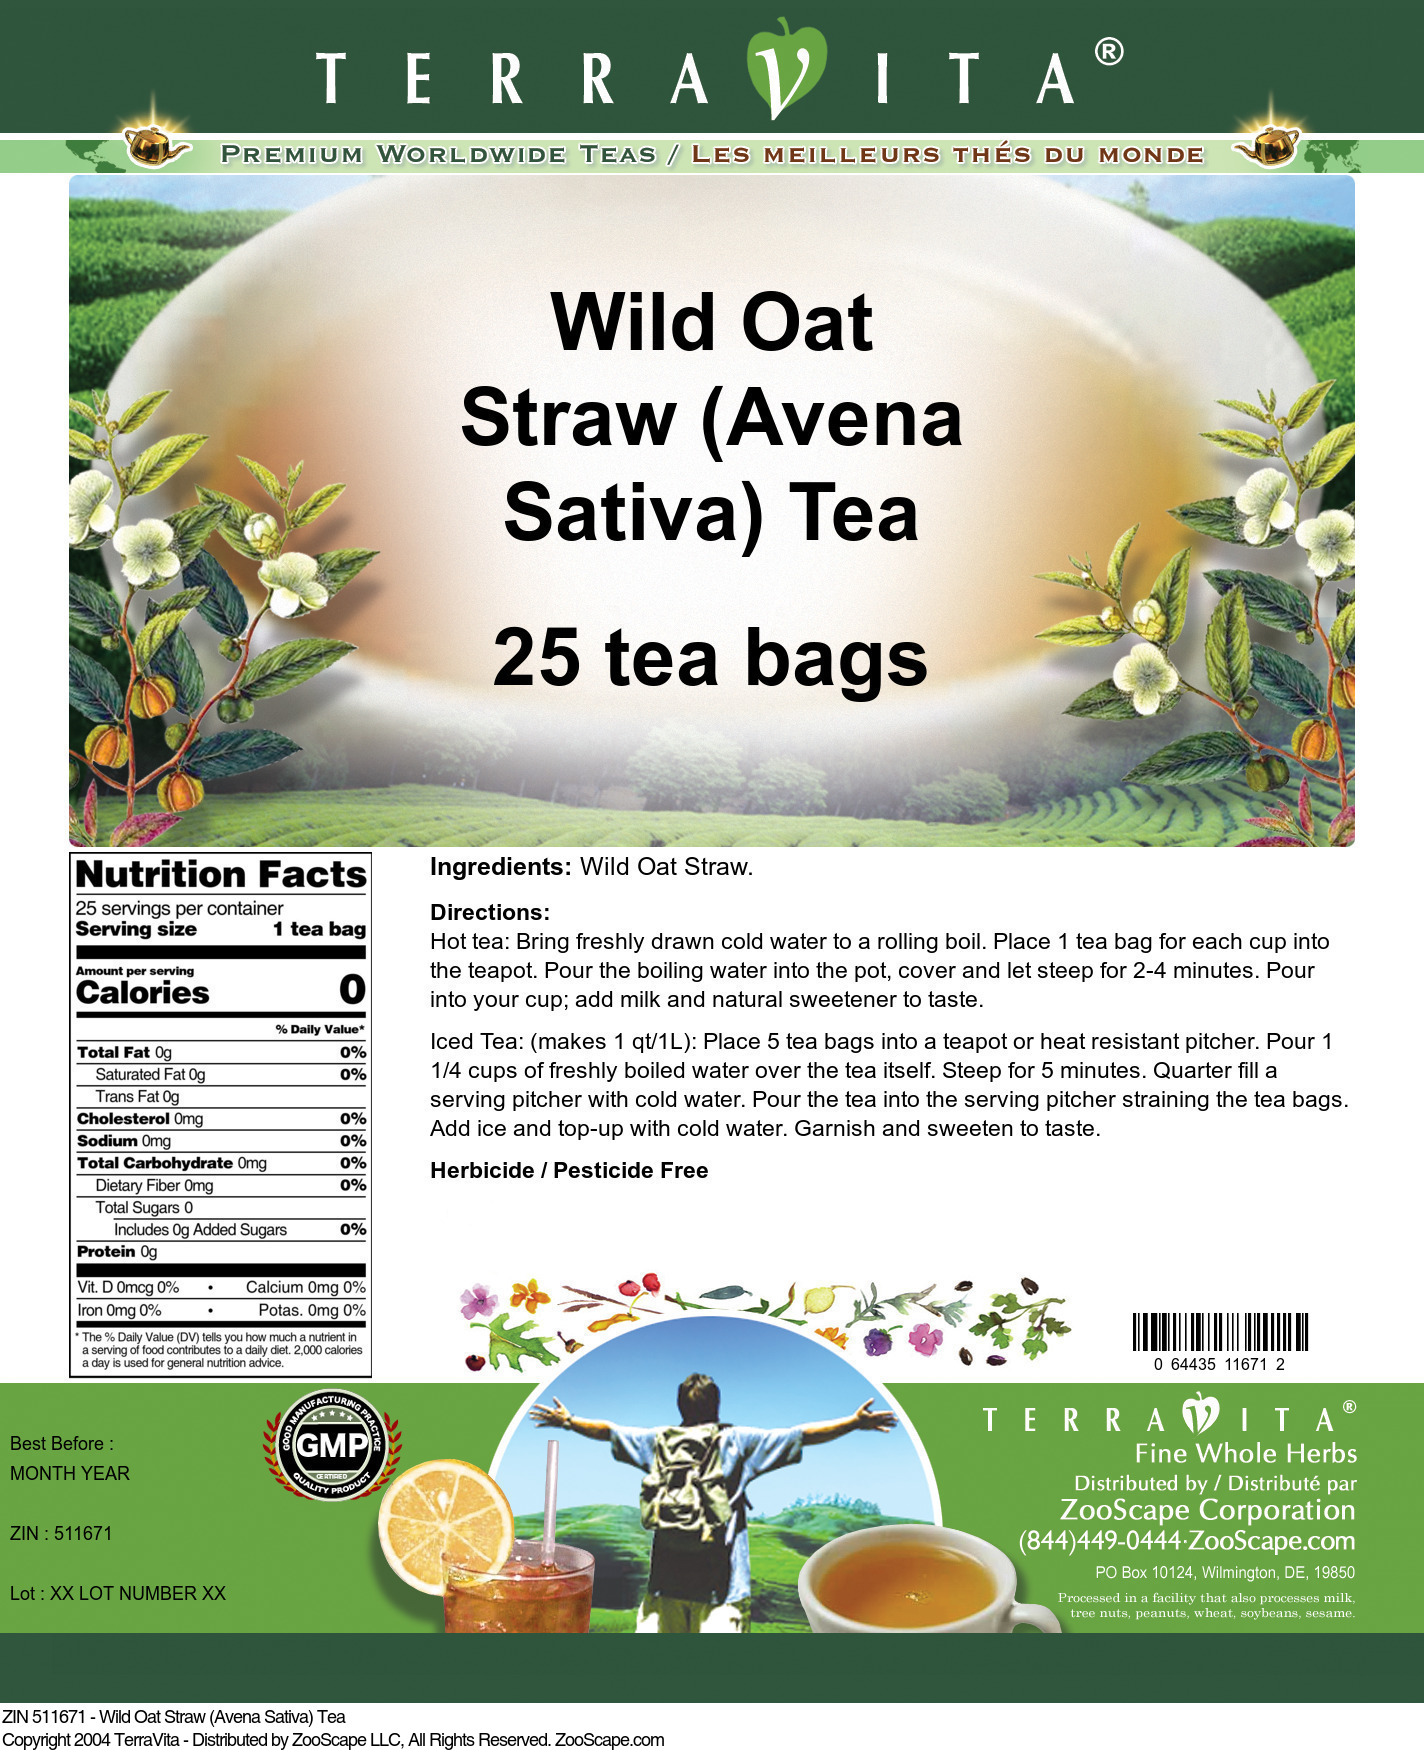 Wild Oat Straw (Avena Sativa) Tea - Label